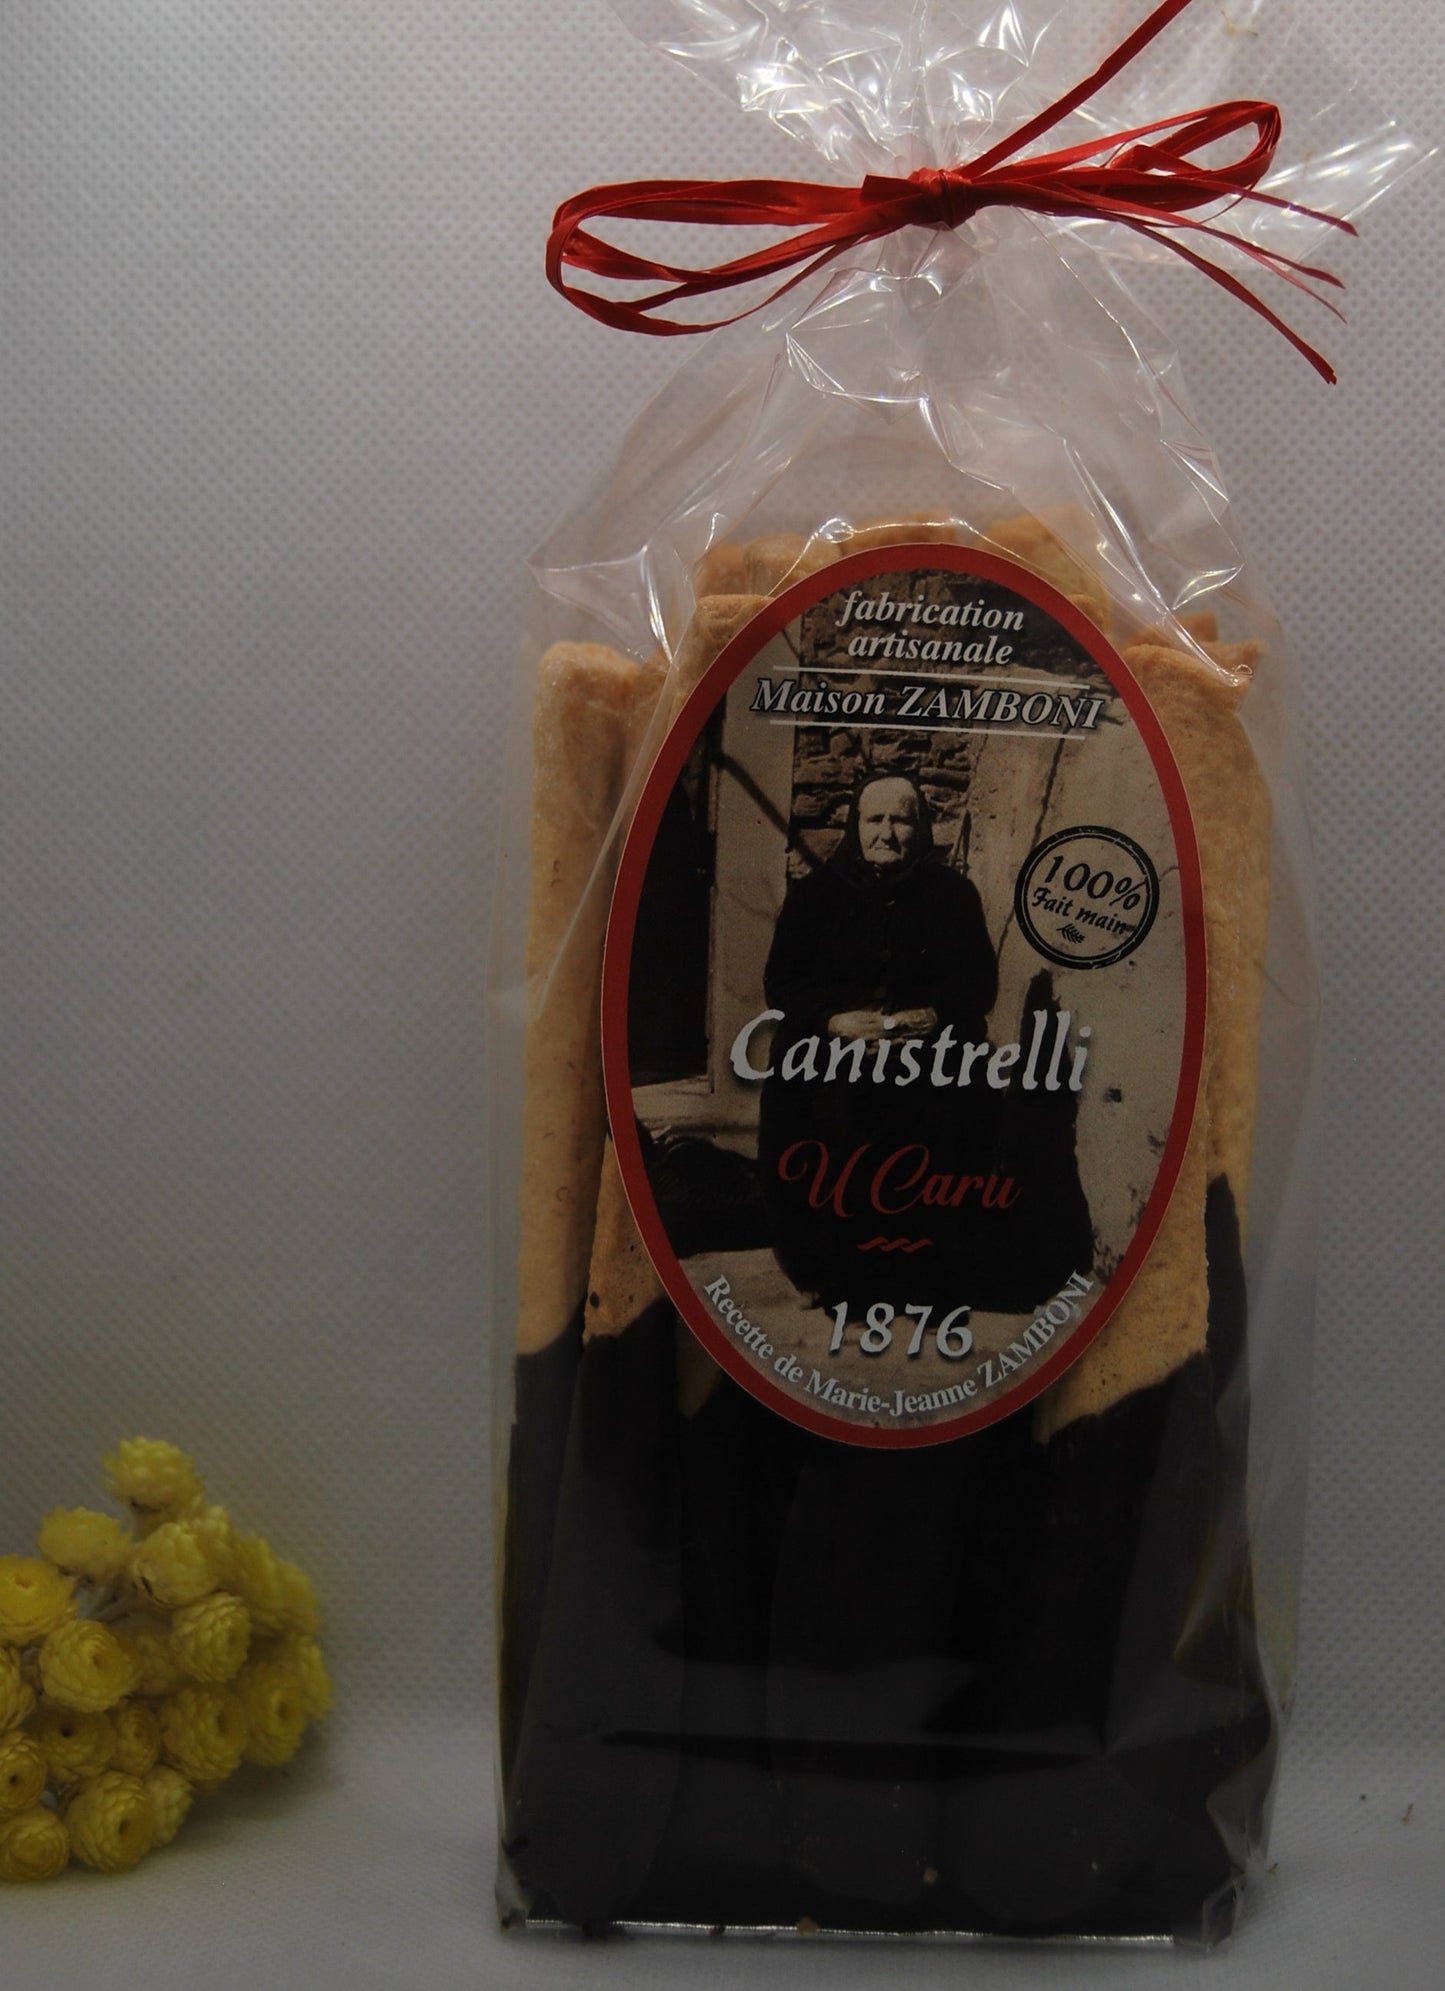 Canistrelli - U Caru - Maison Zamboni